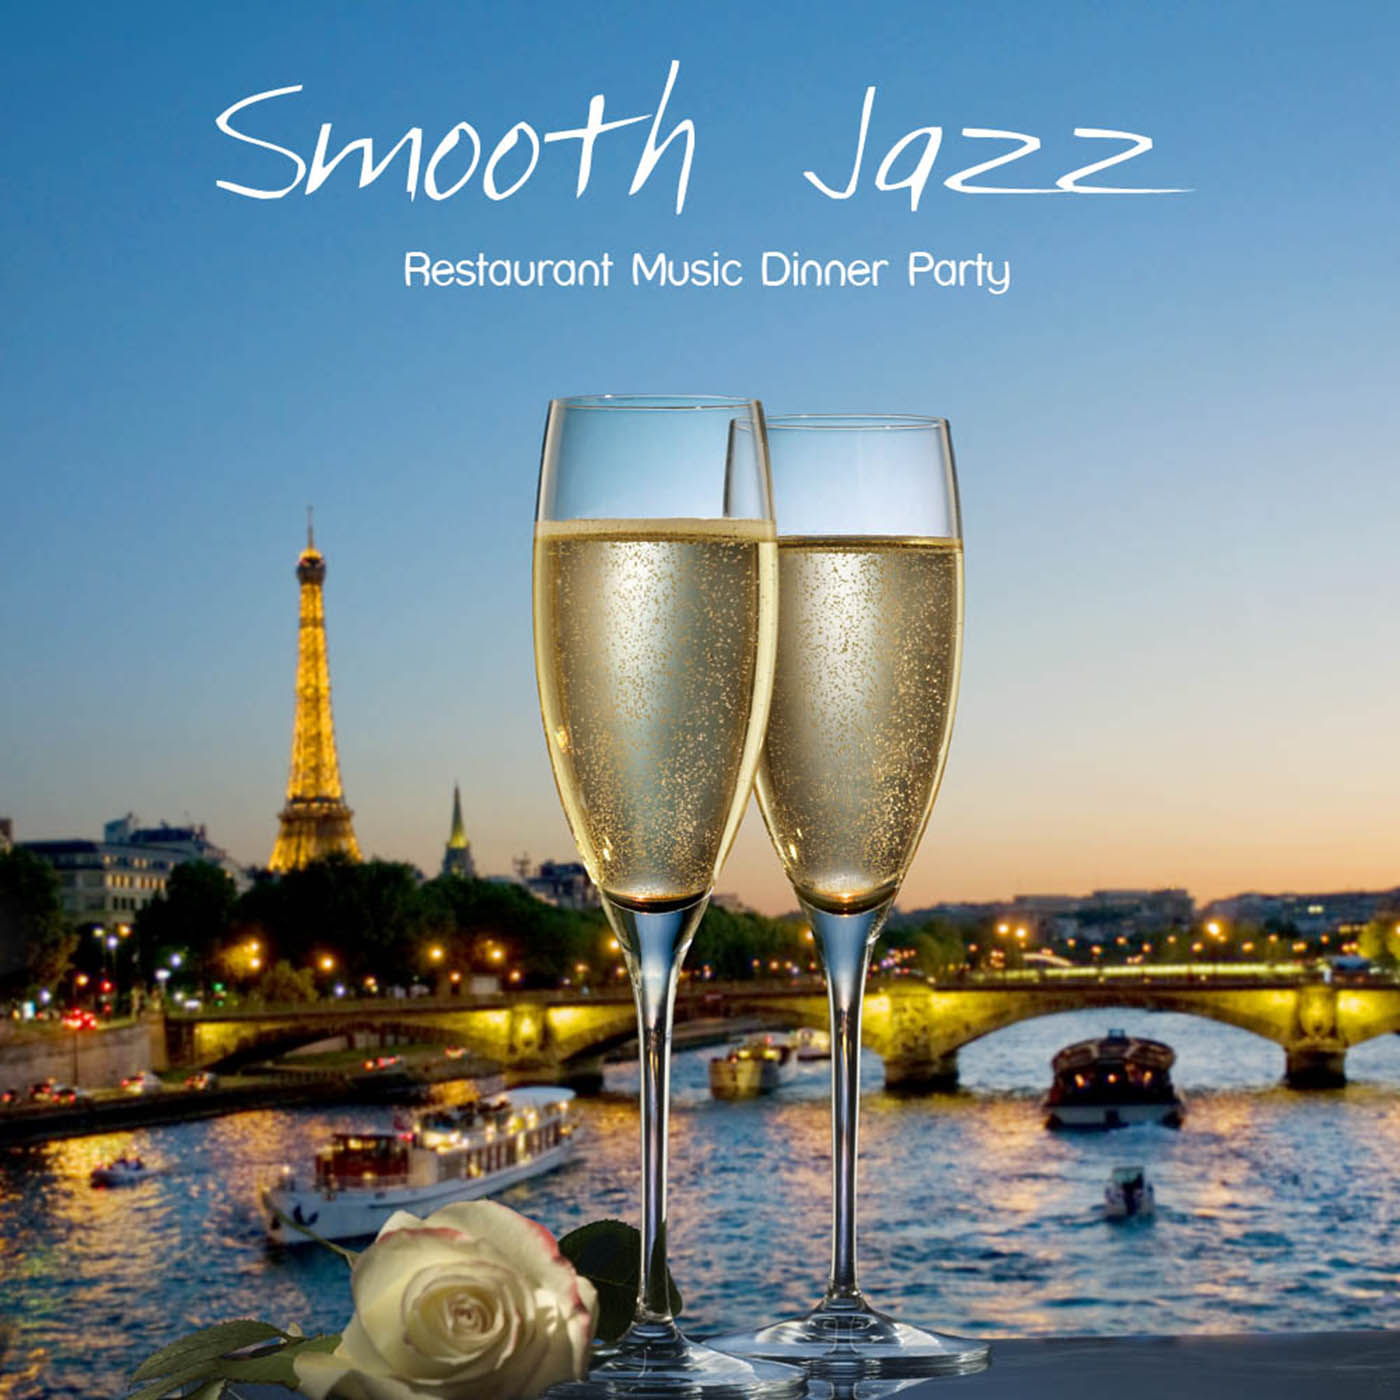 Smooth Jazz Restaurant Music Dinner Party Background Restaurant Music for Dinner